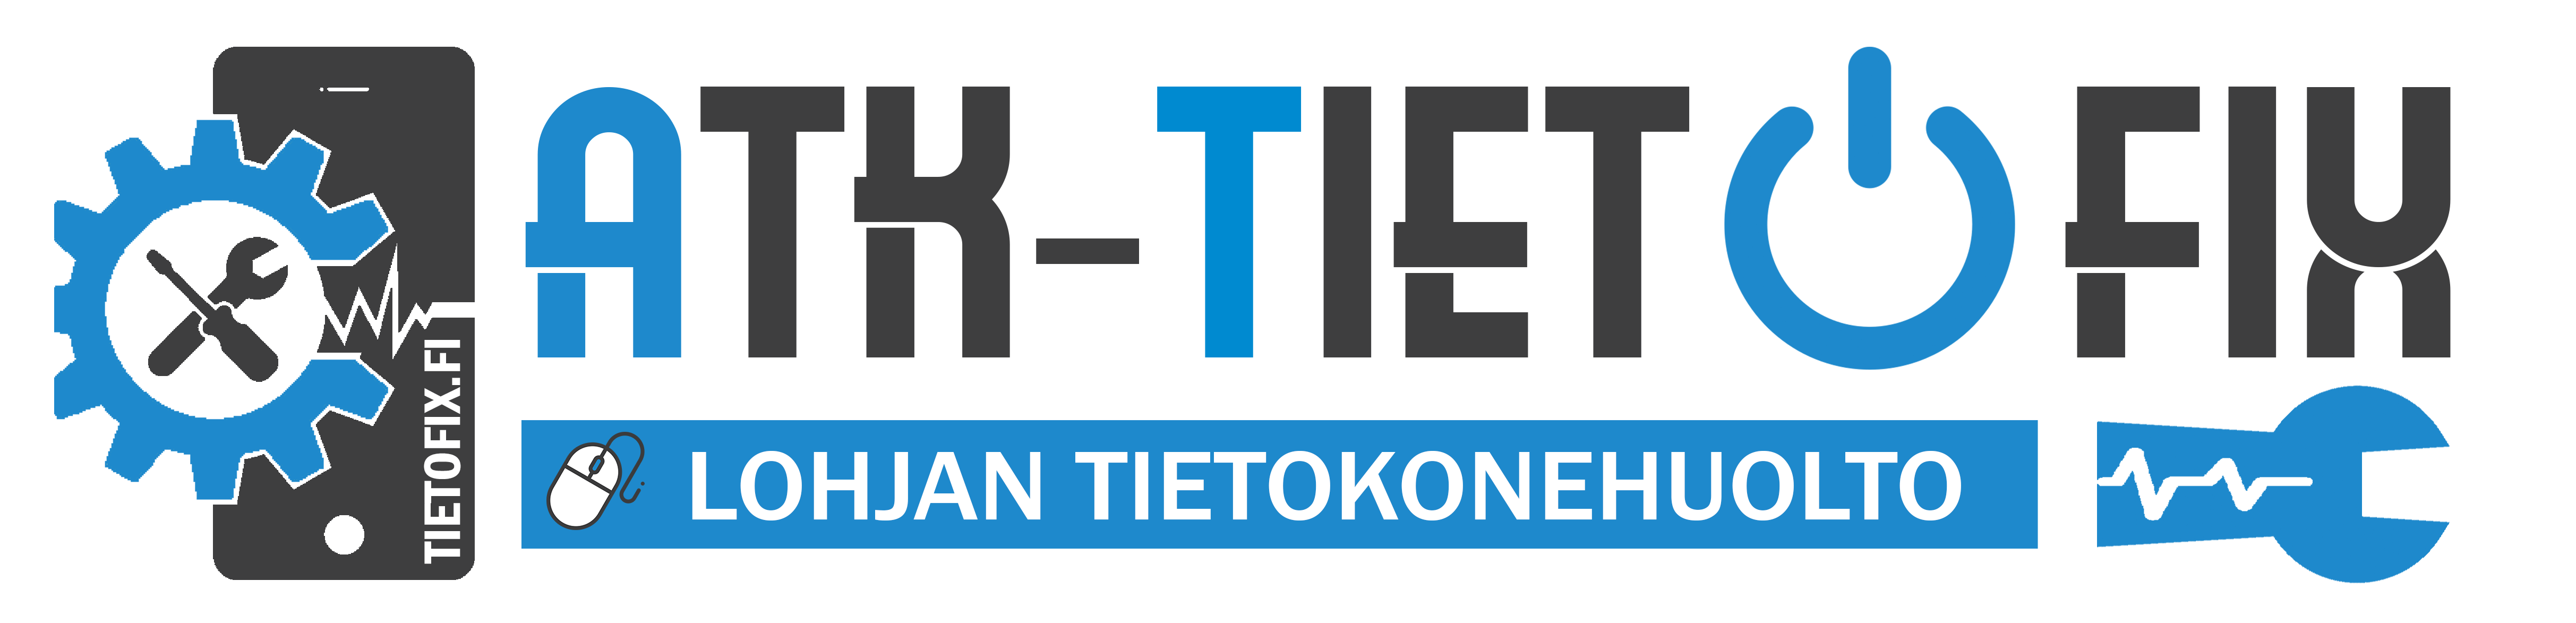 ATK-Tietofix | Lohjan Tietokonehuolto